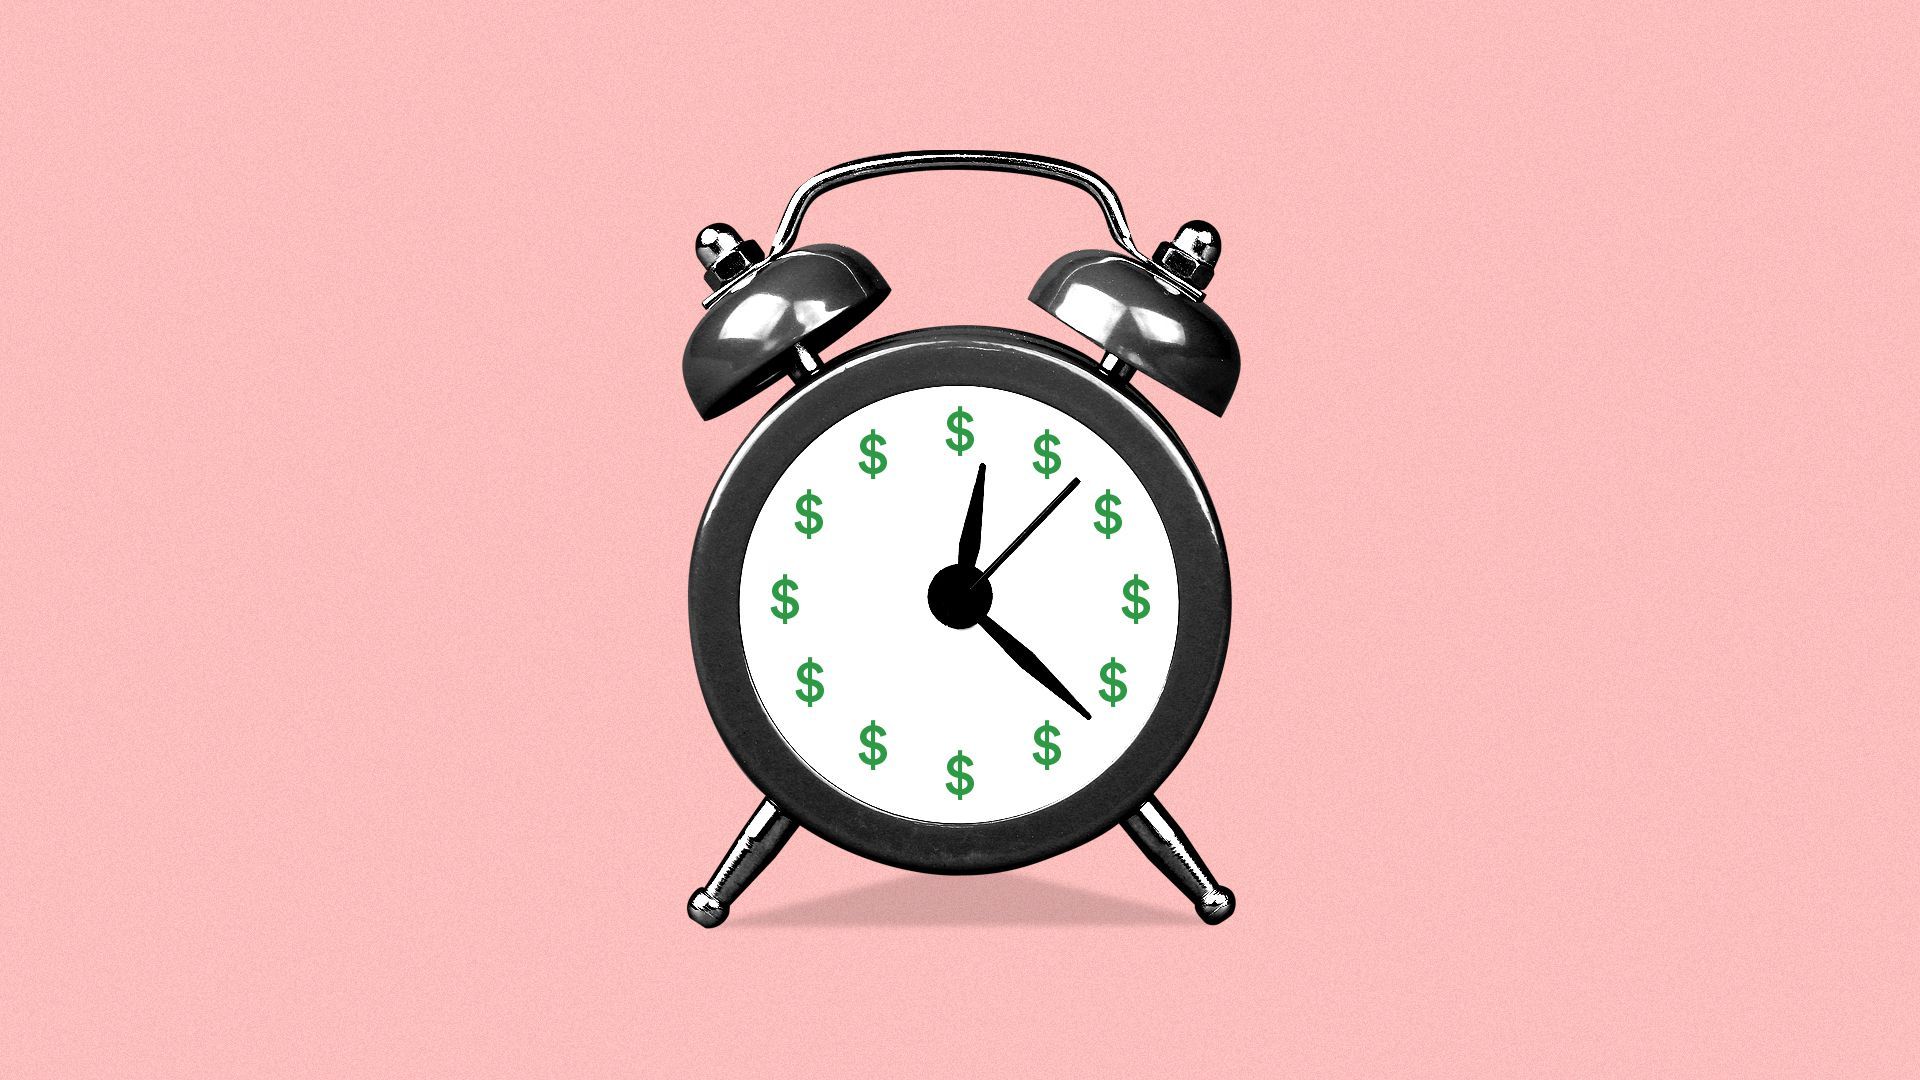 Illustration of a money alarm clock